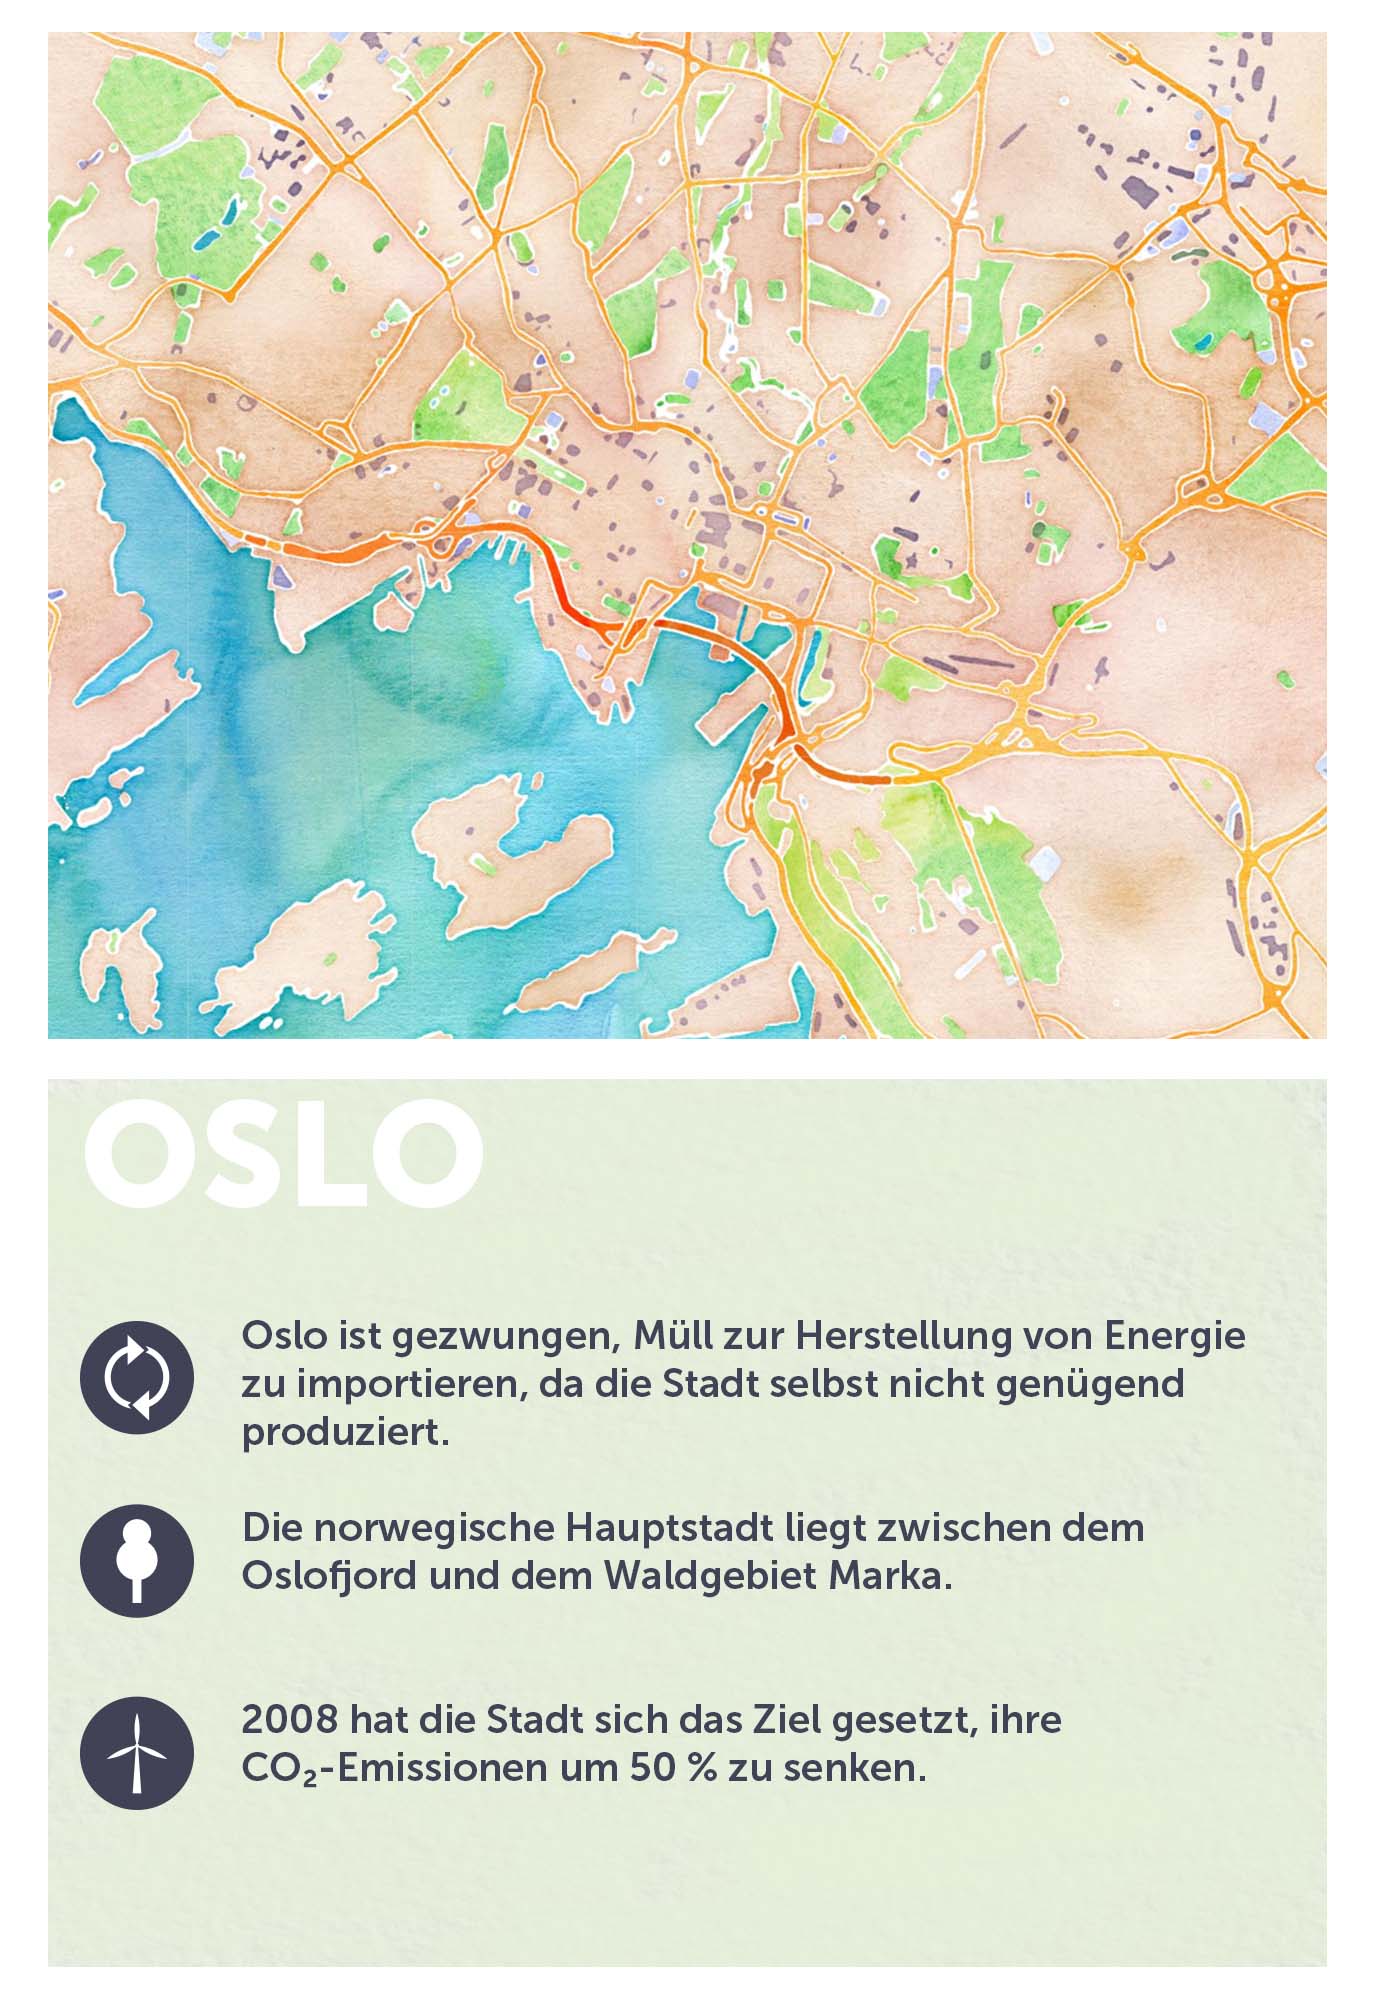 Oslo grüne Stadt in Europa